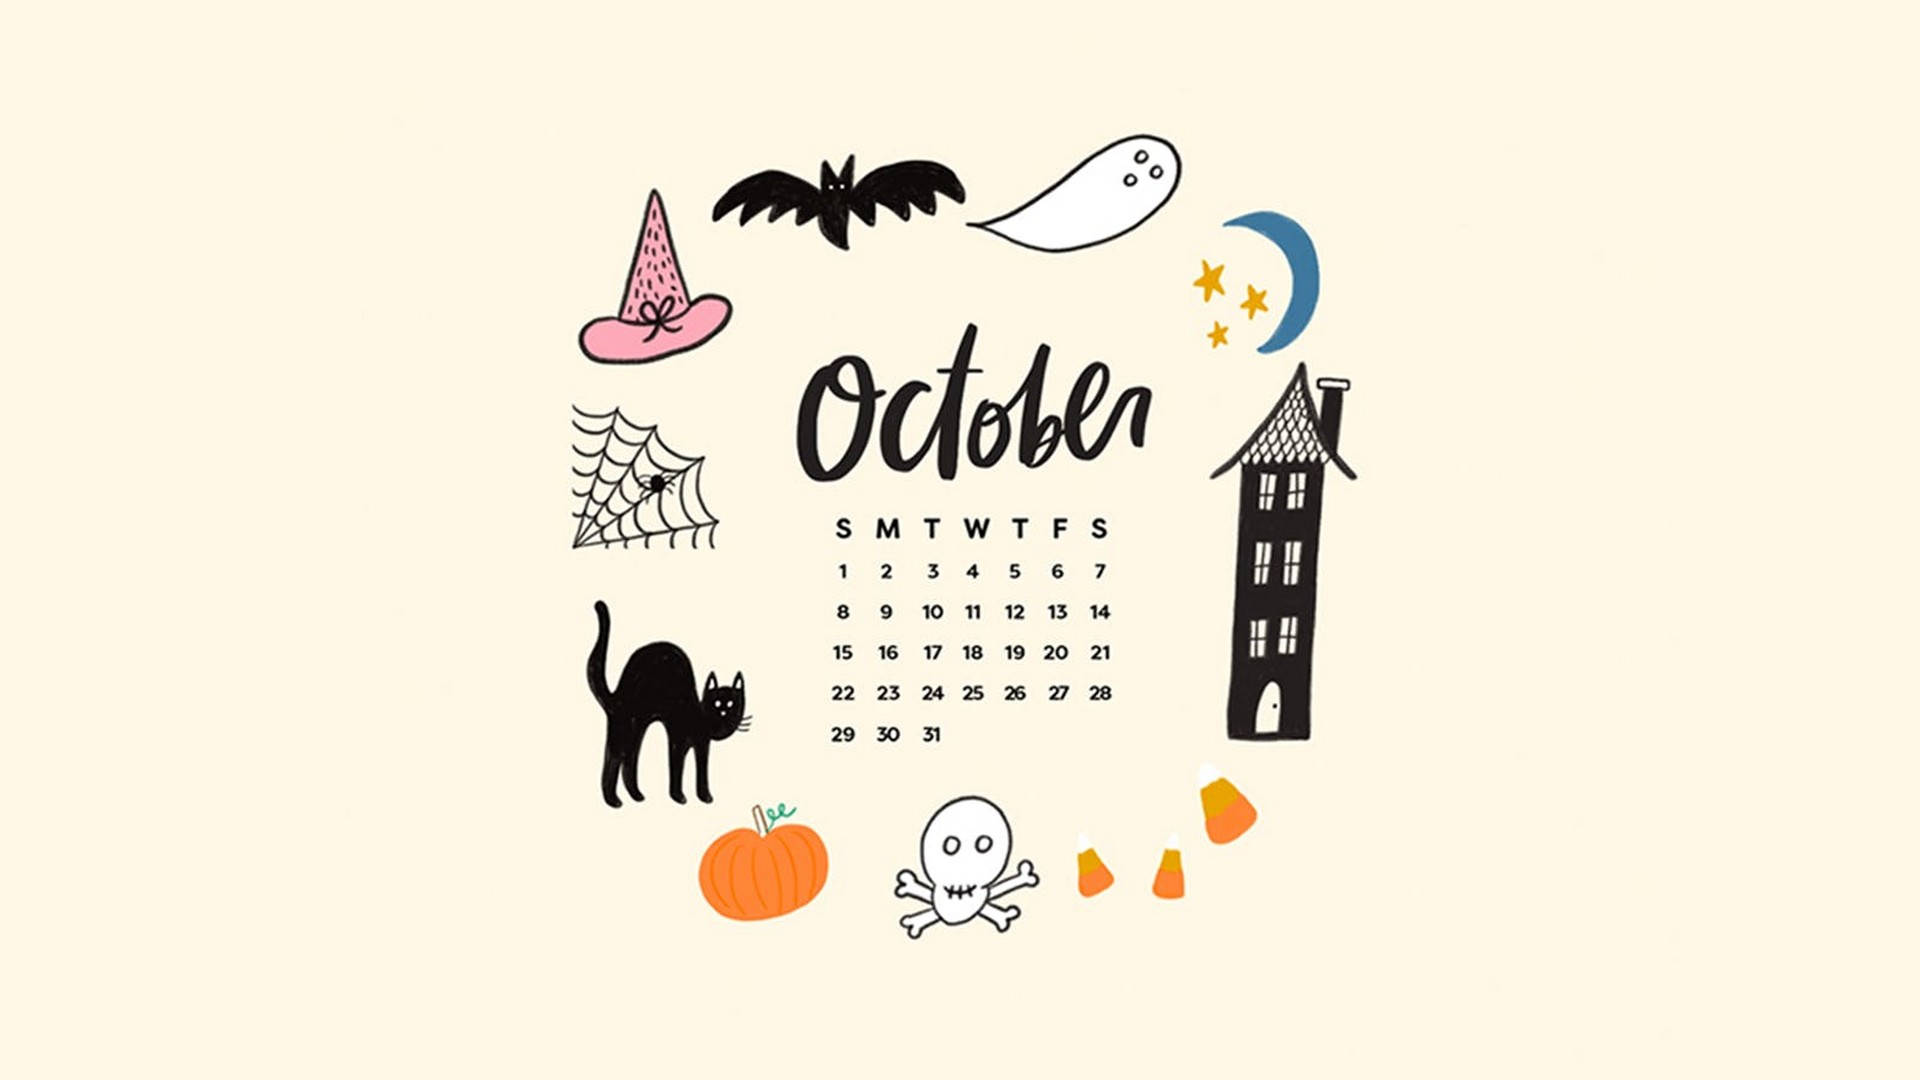 30 Frightfully Fun October Aesthetic Wallpapers For Your iPhone  October  calendar wallpaper Calendar wallpaper October wallpaper